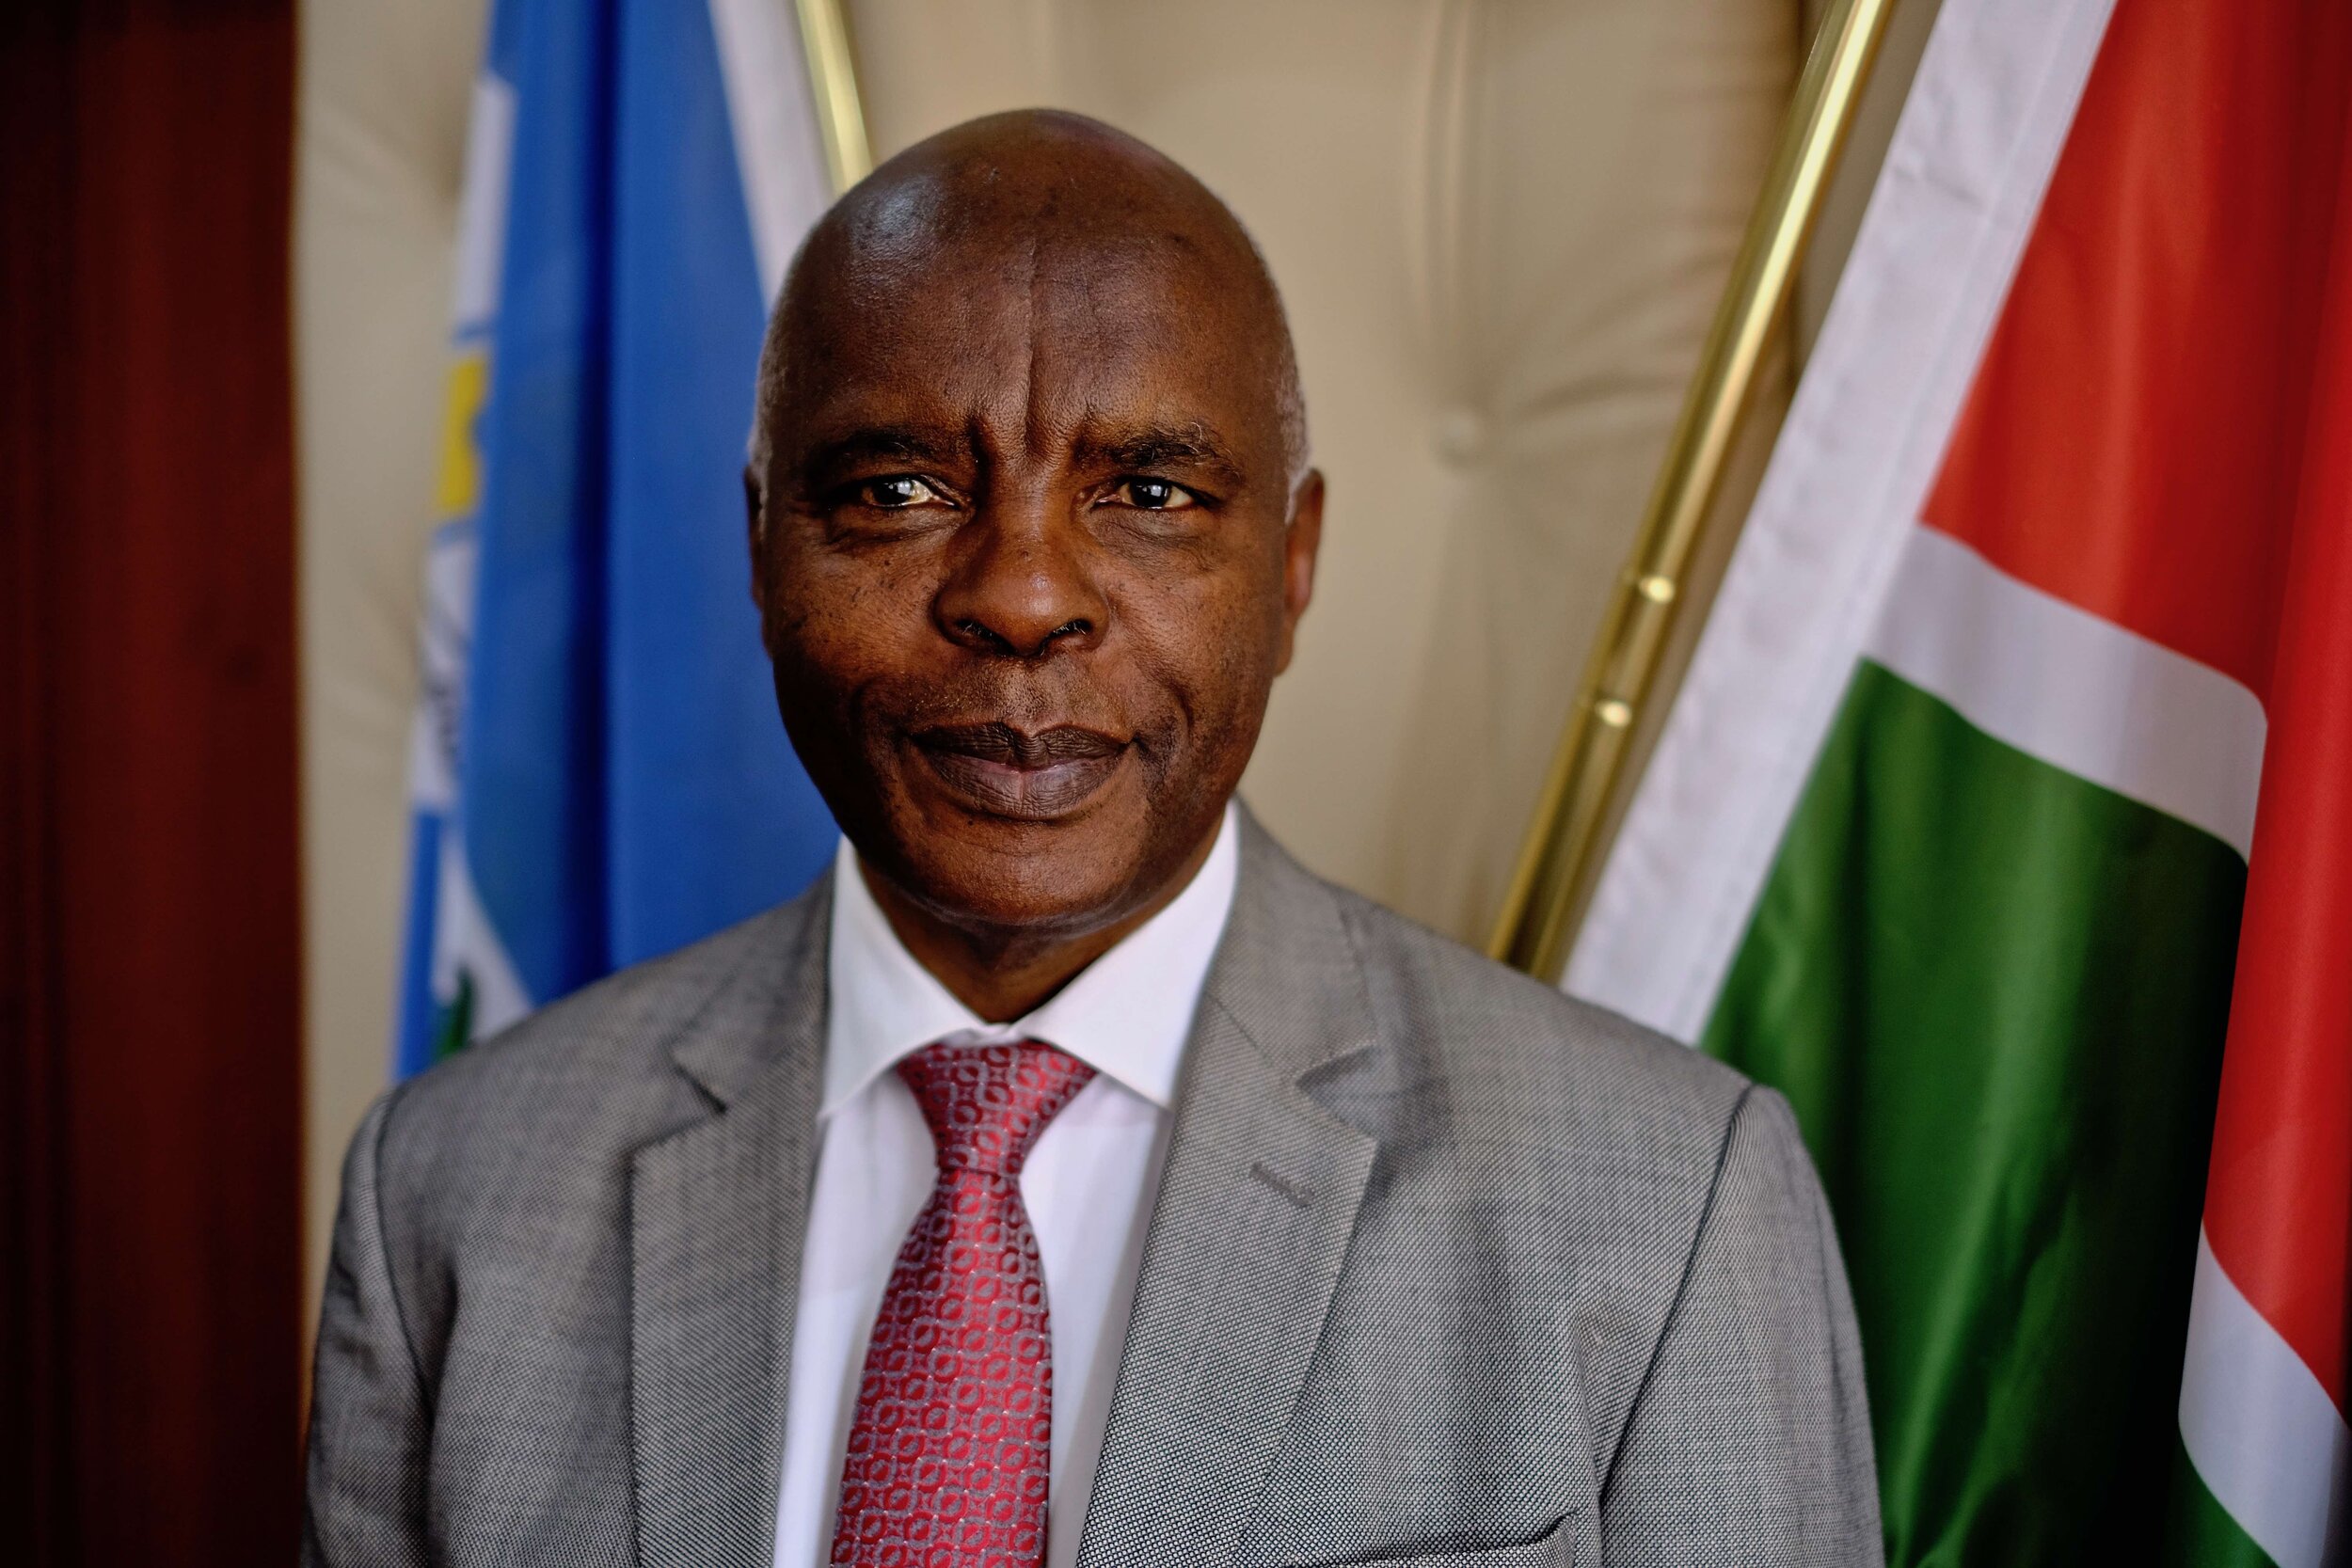 Governor Kibwana Wote Makueni NRC by Joost Bastmeijer 1.jpg